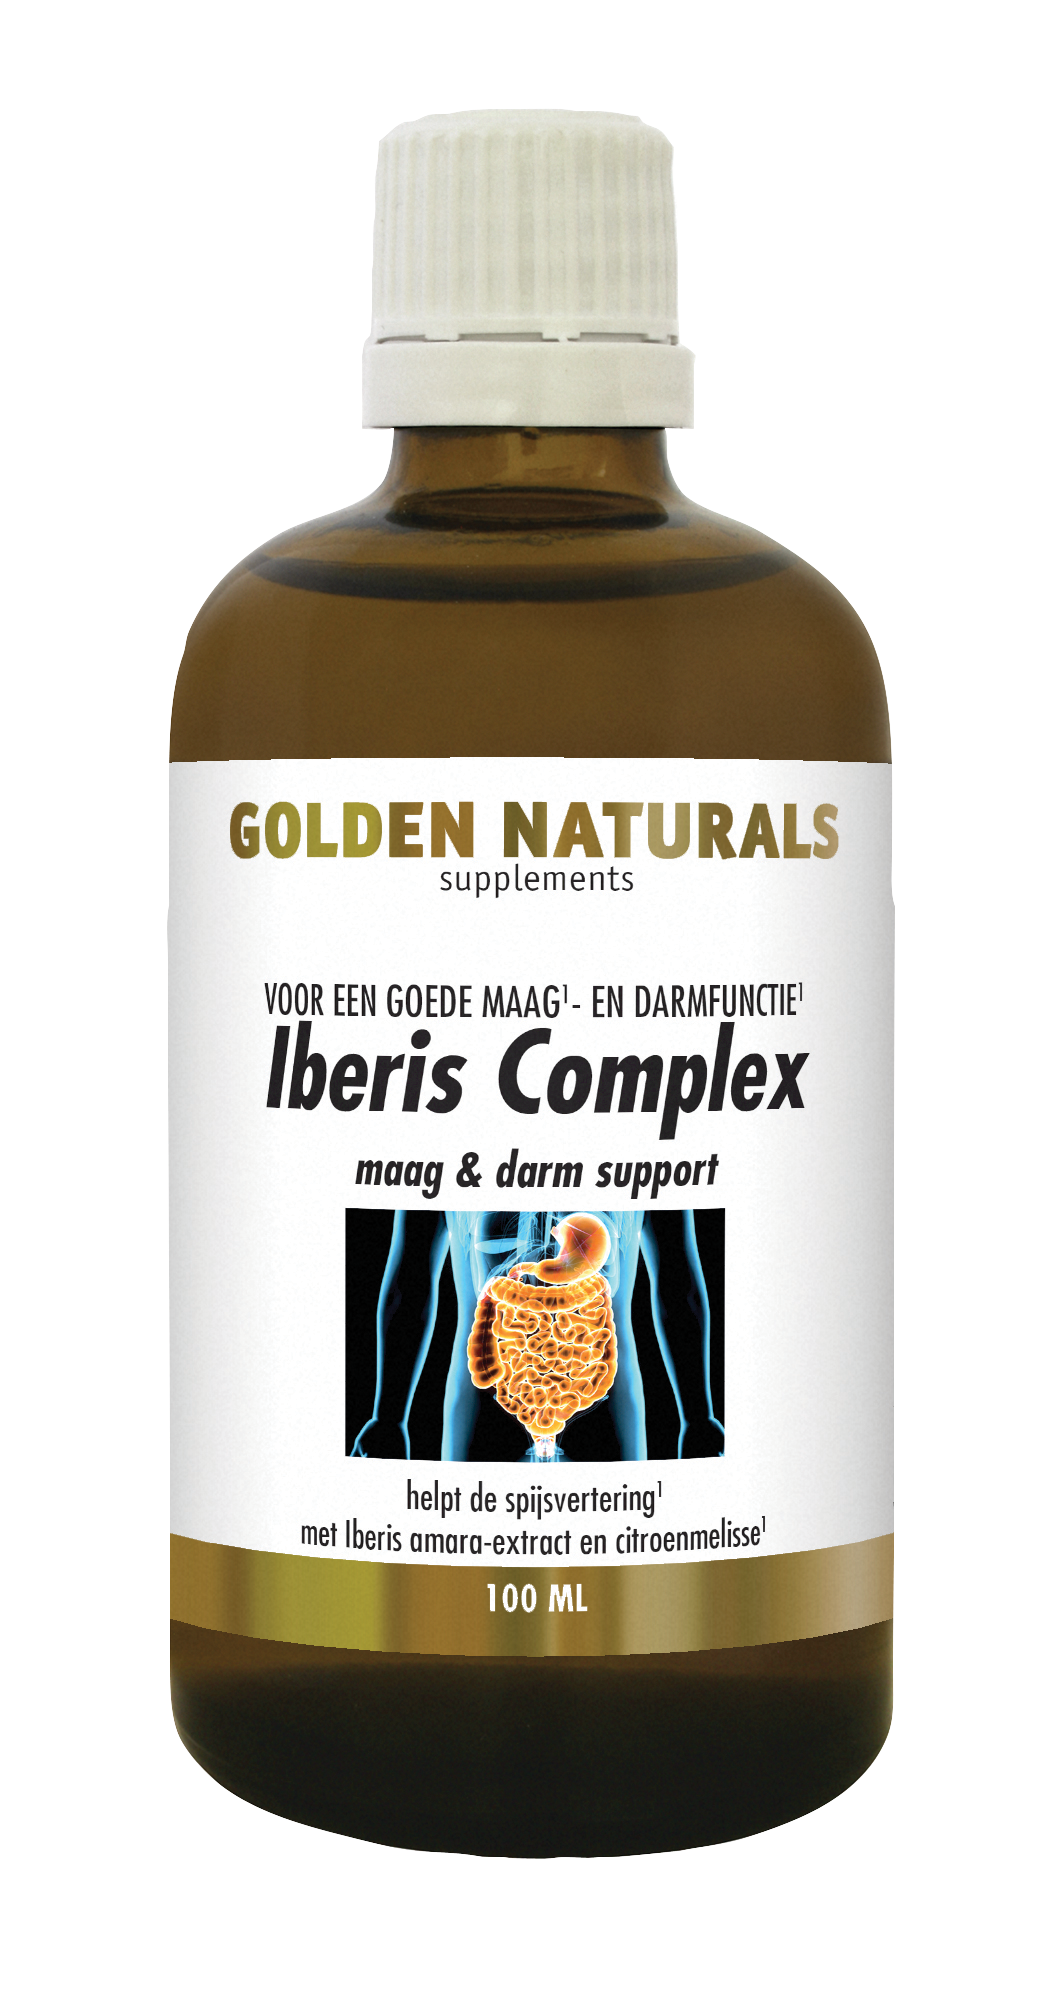 Golden Naturals Golden Naturals Iberis Complex Maag & Darm Support